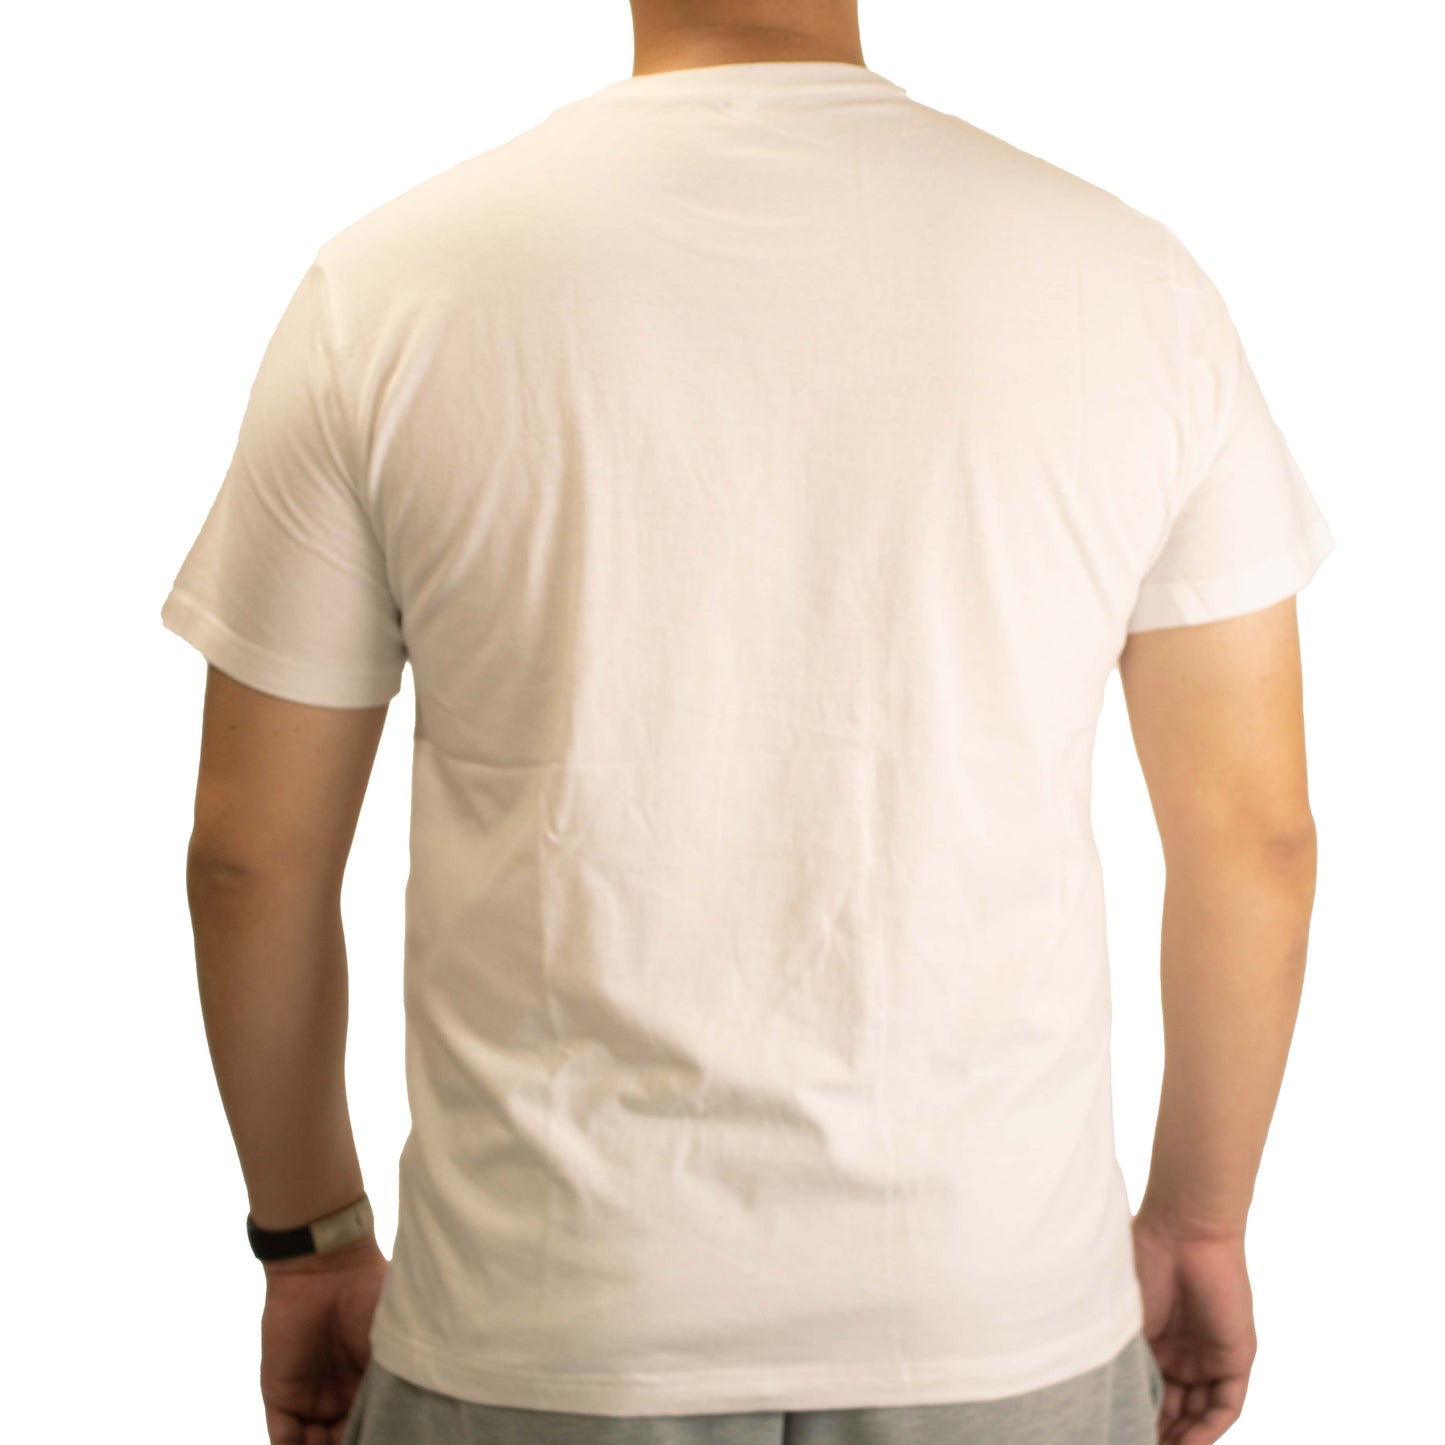 Cotton White T-Shirt